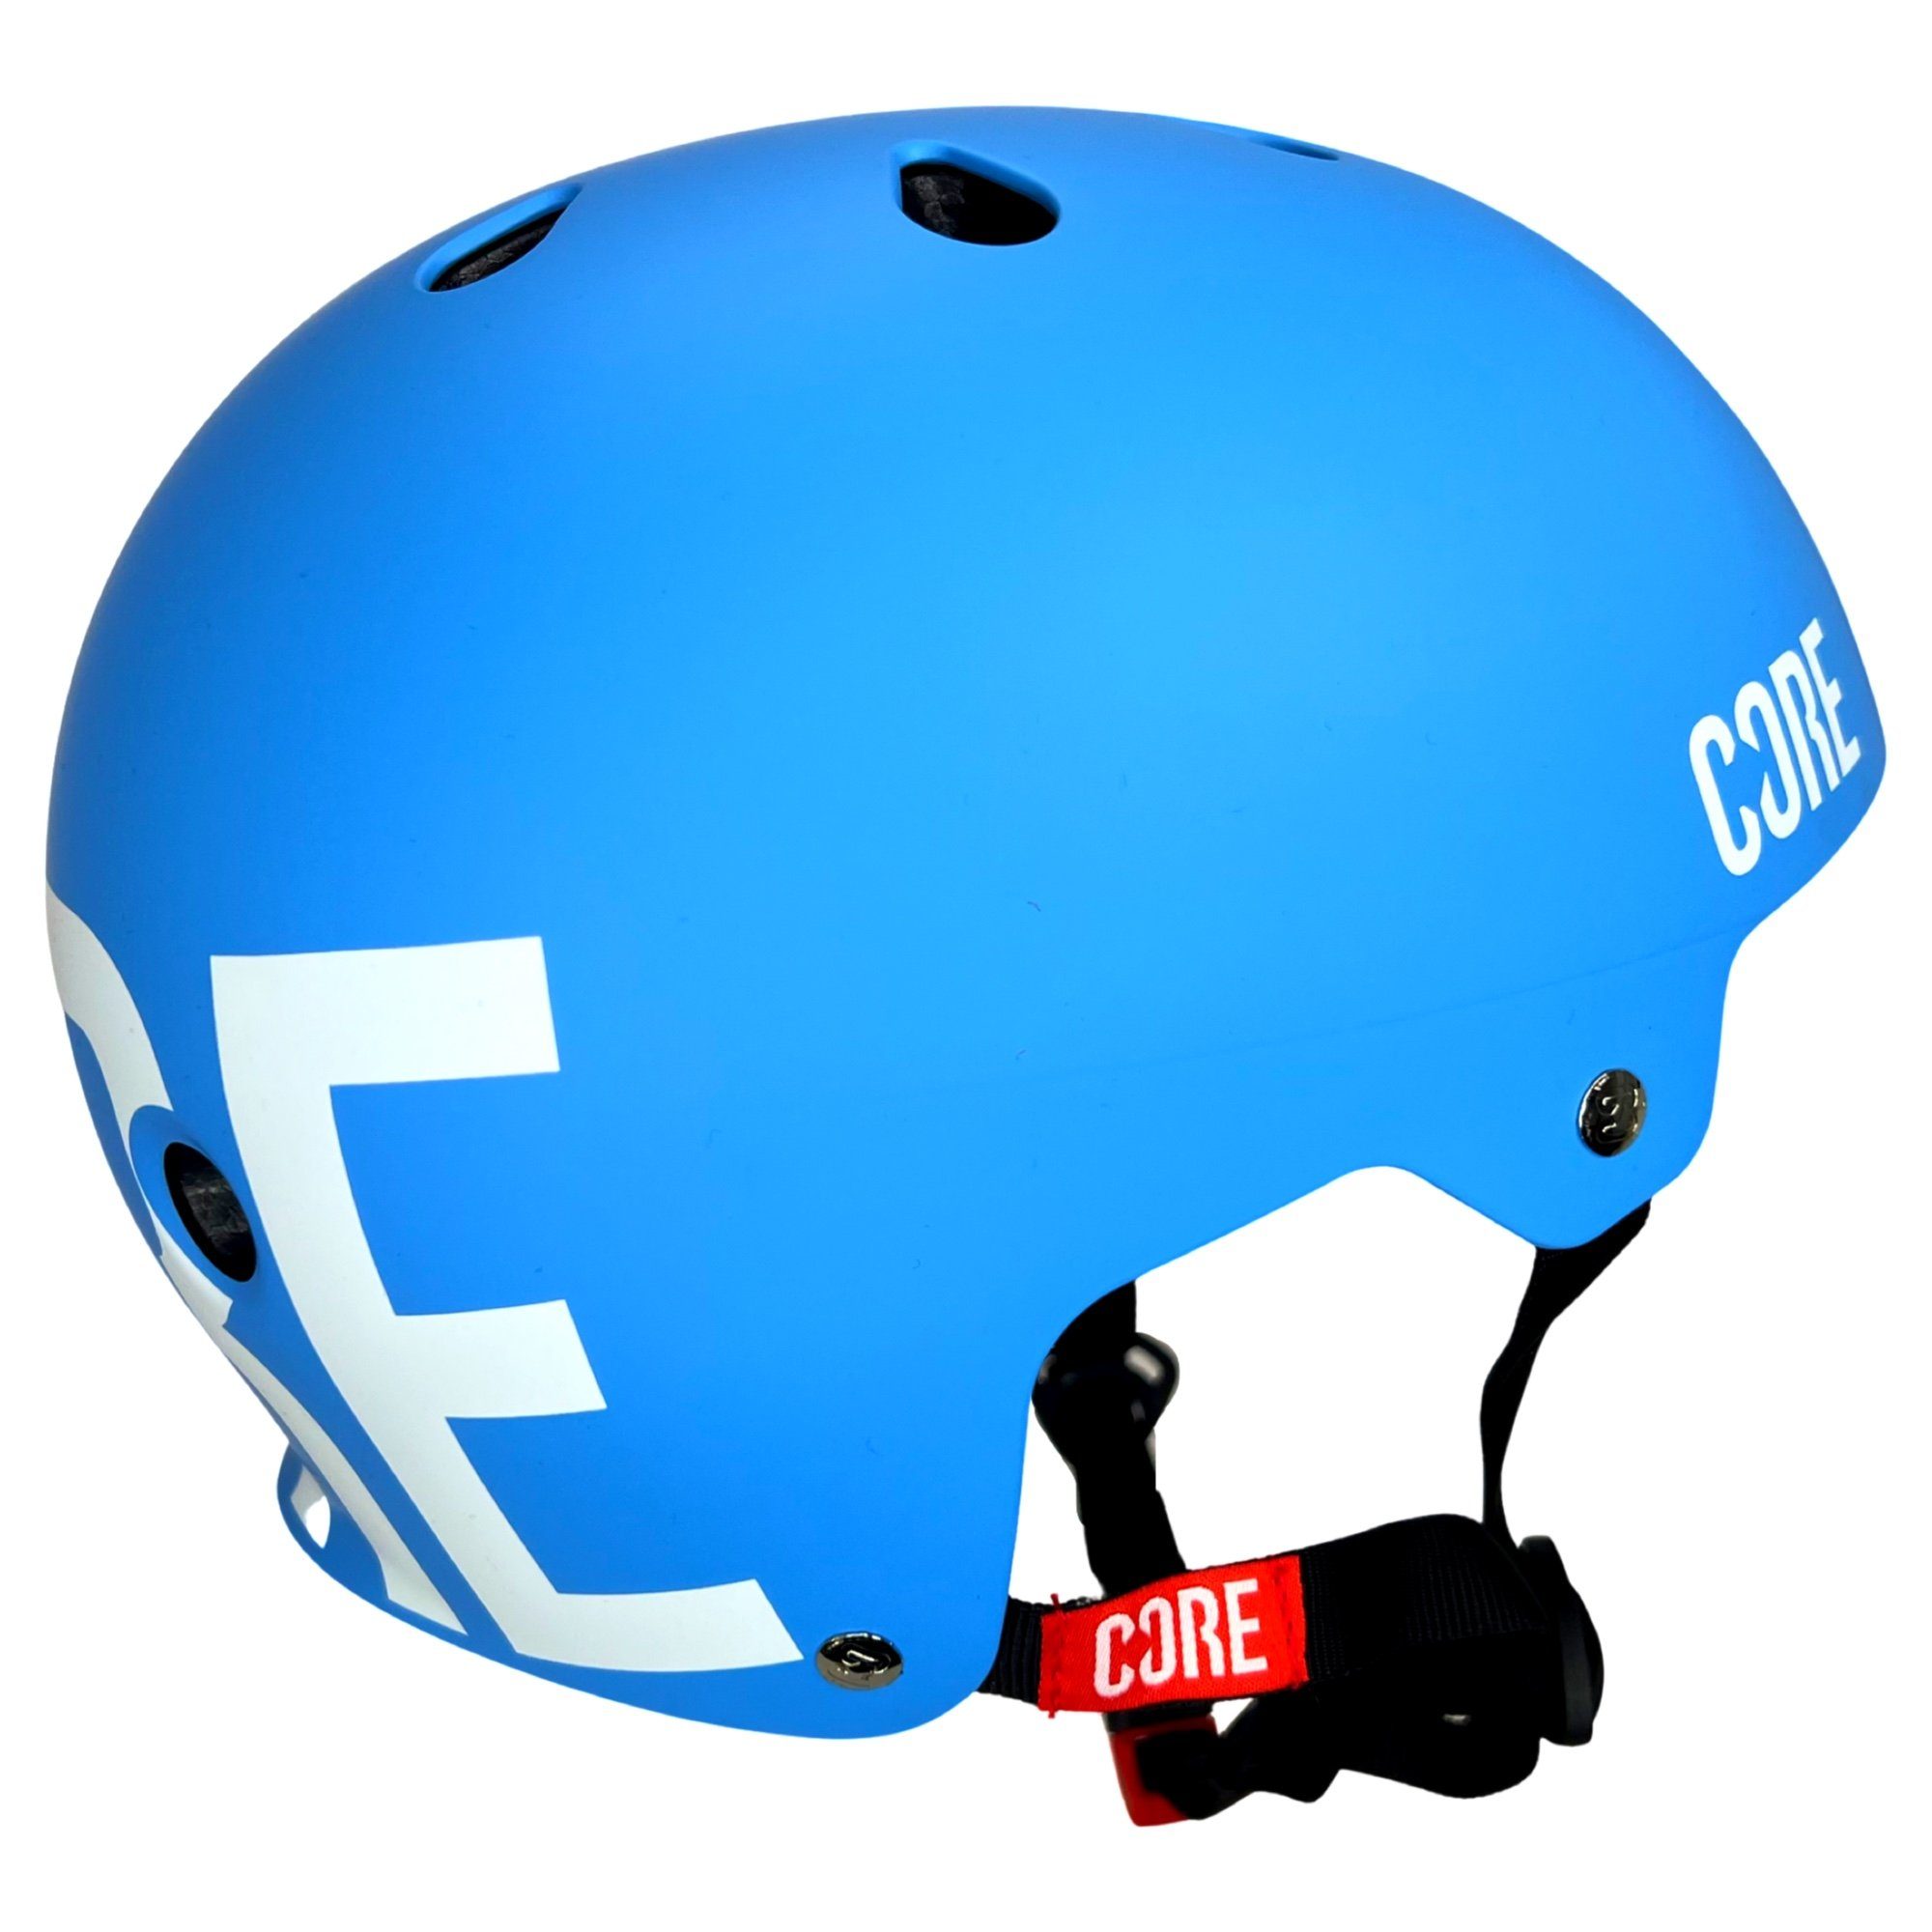 Skate Helm Dirt Core Blau/Logo Core Weiß Stunt-Scooter Action Street Sports Protektoren-Set